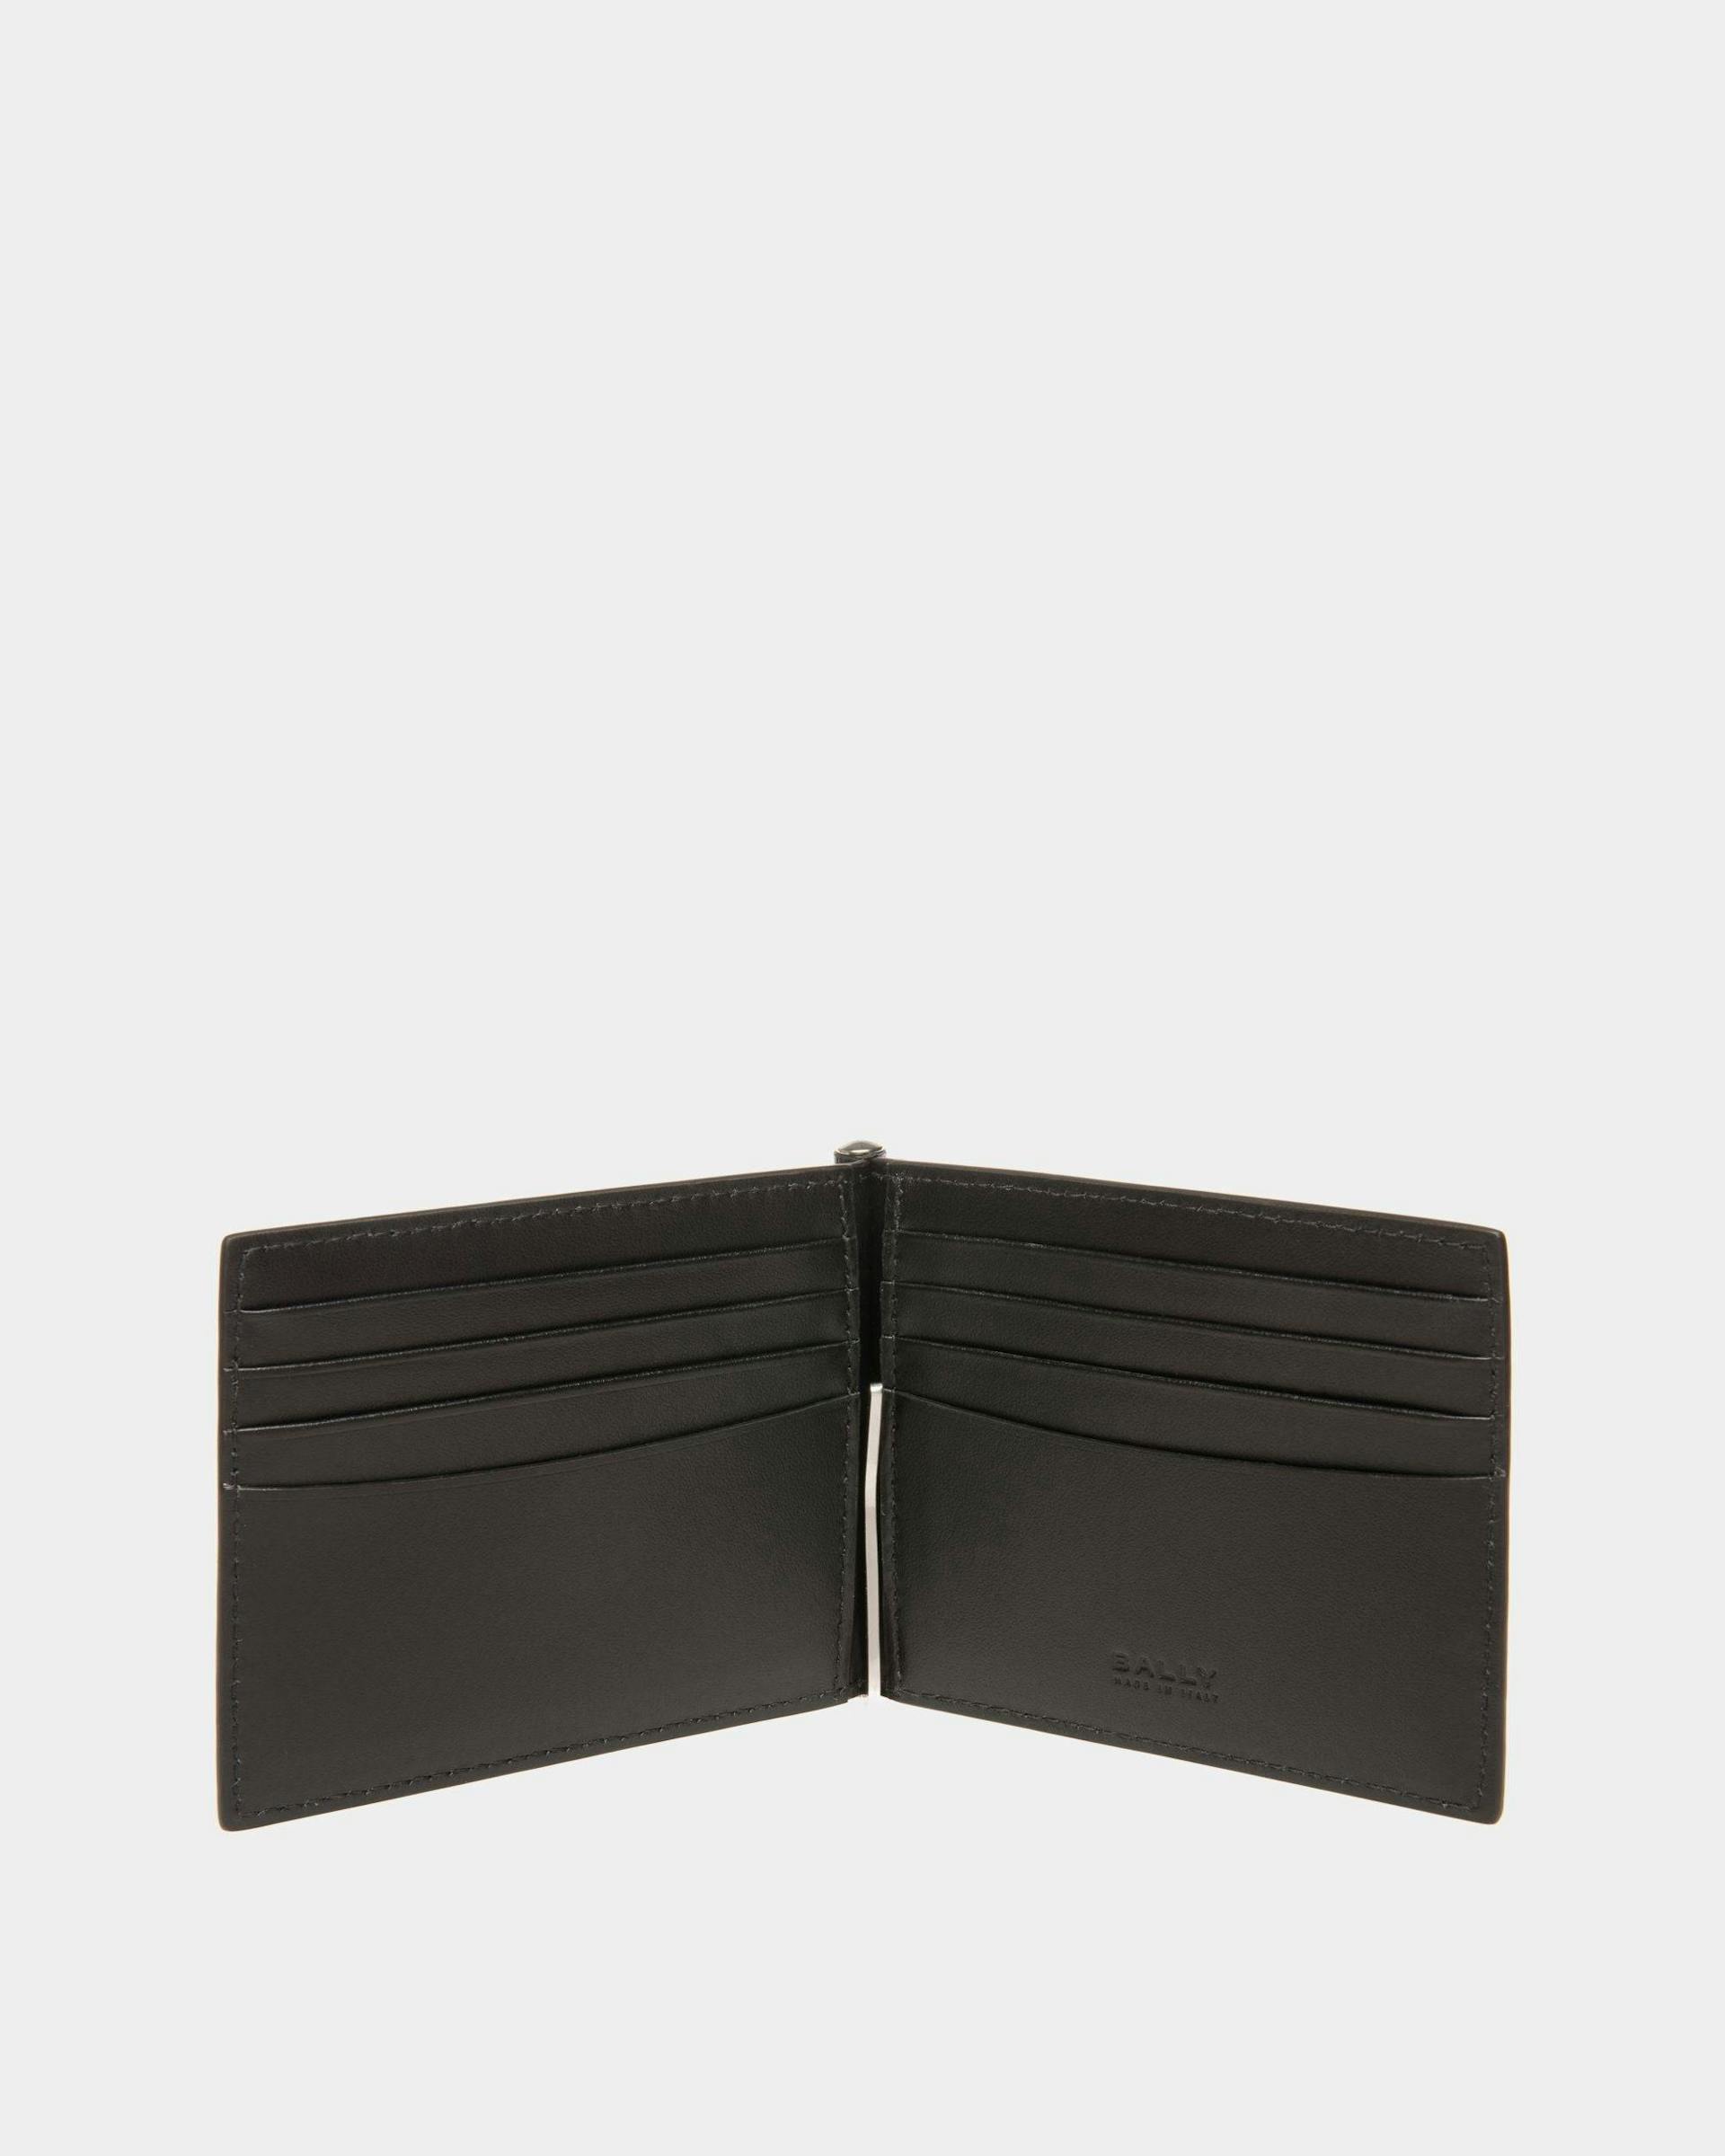 Men's Banque Wallet In Black Leather | Bally | Still Life Open / Inside